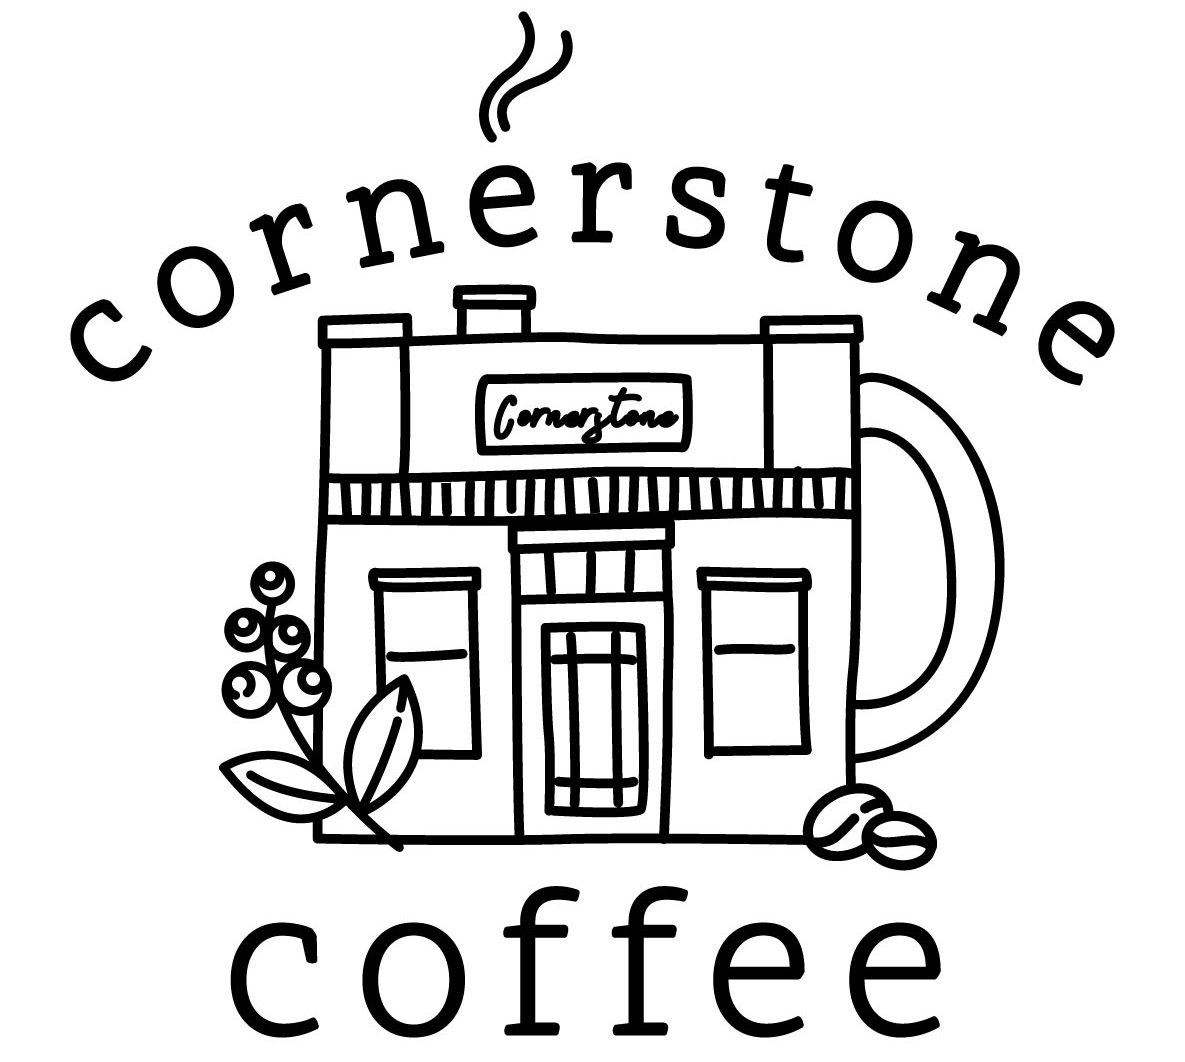 Cornerstone Coffee